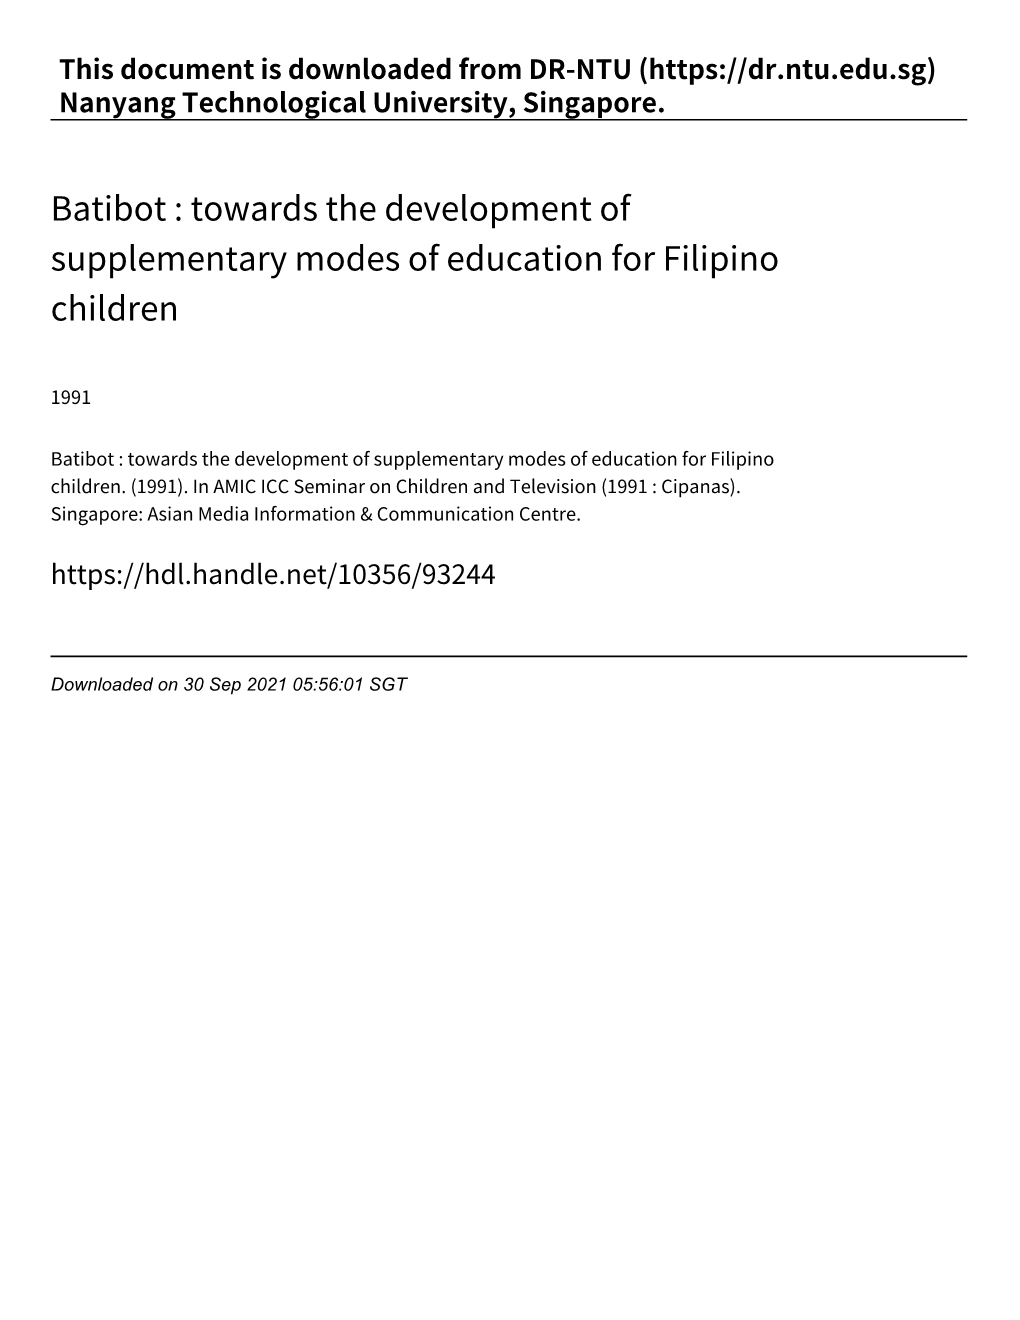 Batibot : Towards the Development of Supplementary Modes of Education for Filipino Children